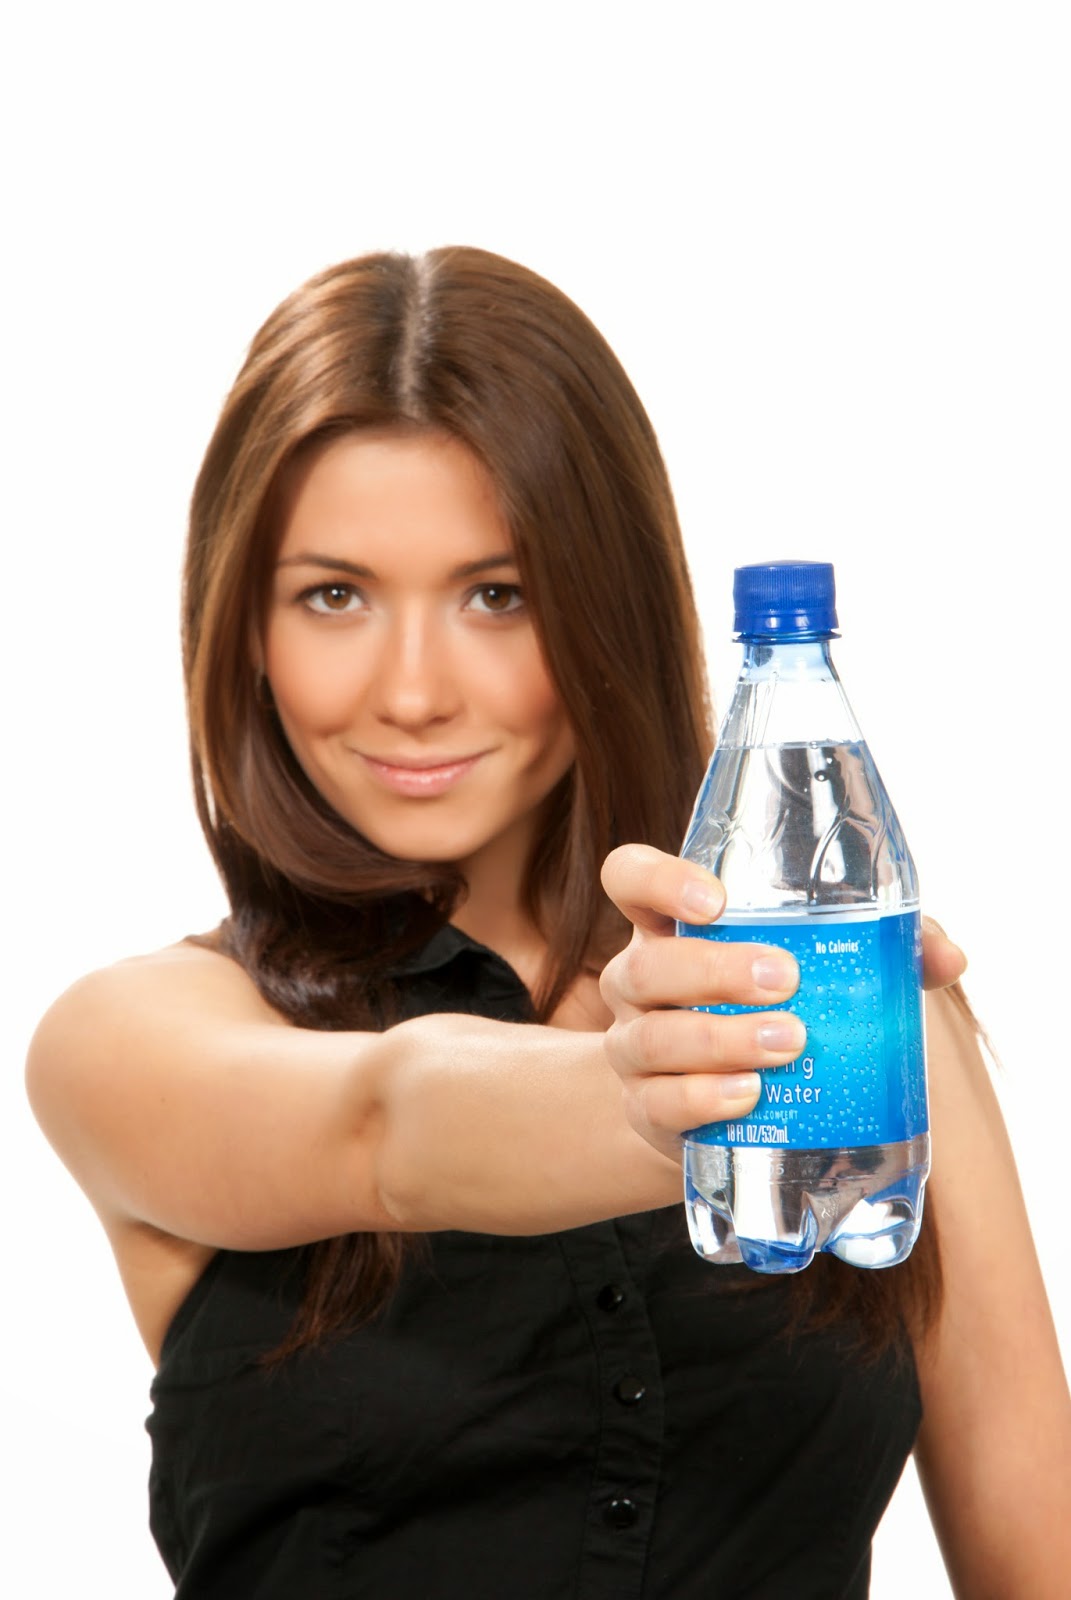 Бутылка воды в руке. Бутылка воды в руке девушки. Девушка с бутылкой воды. Девушка с питьевой водой. Девушка держит бутылку.